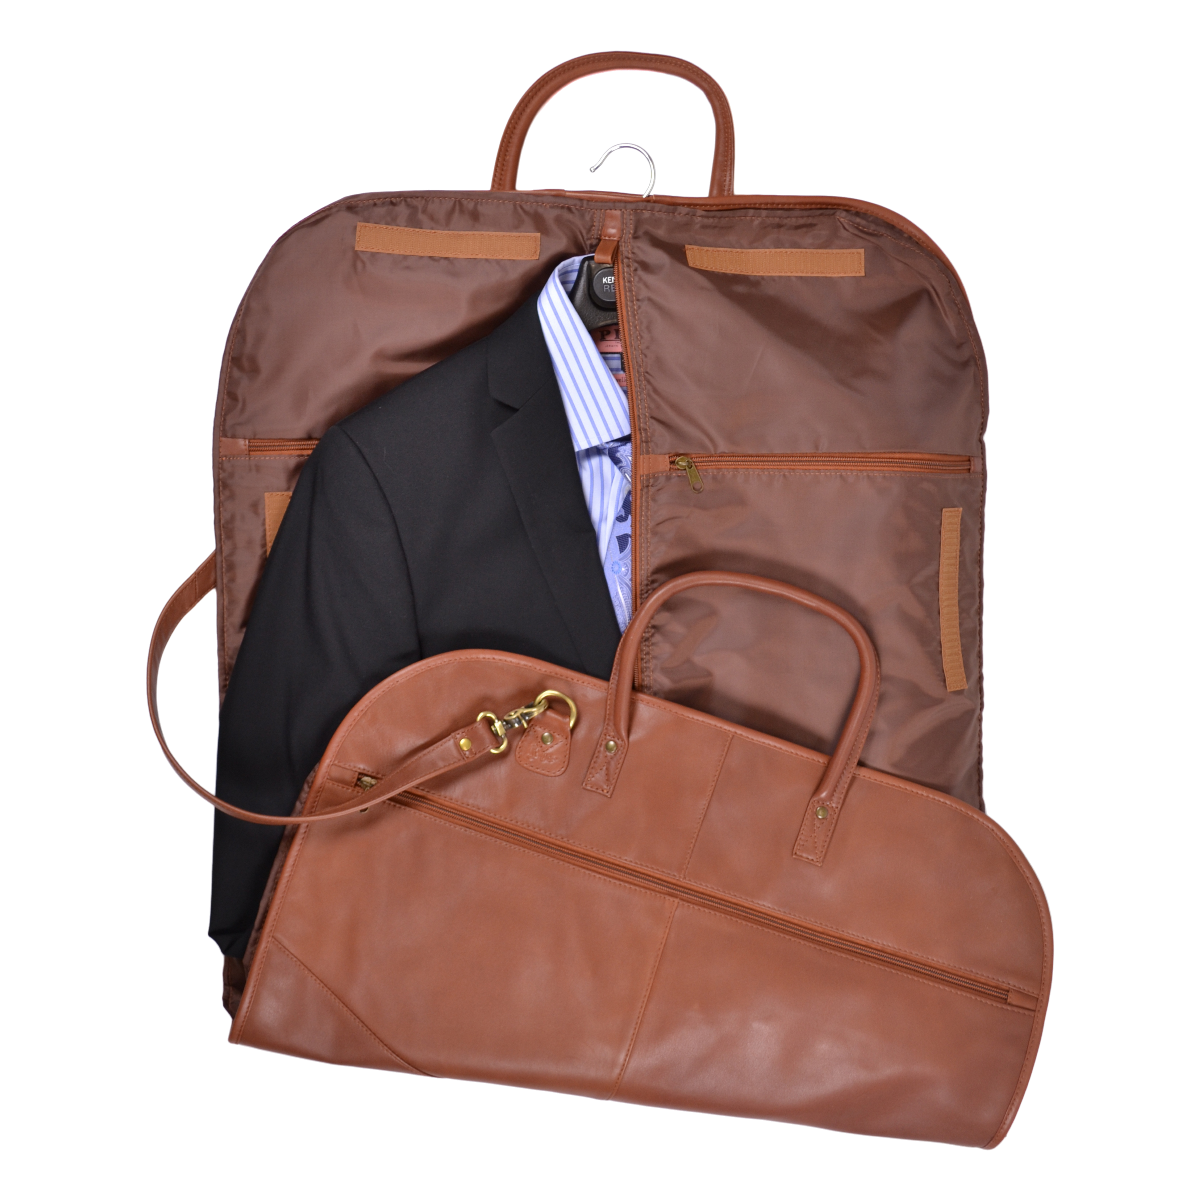 Royce Executive Office Black Leather Laptop Messenger Bag